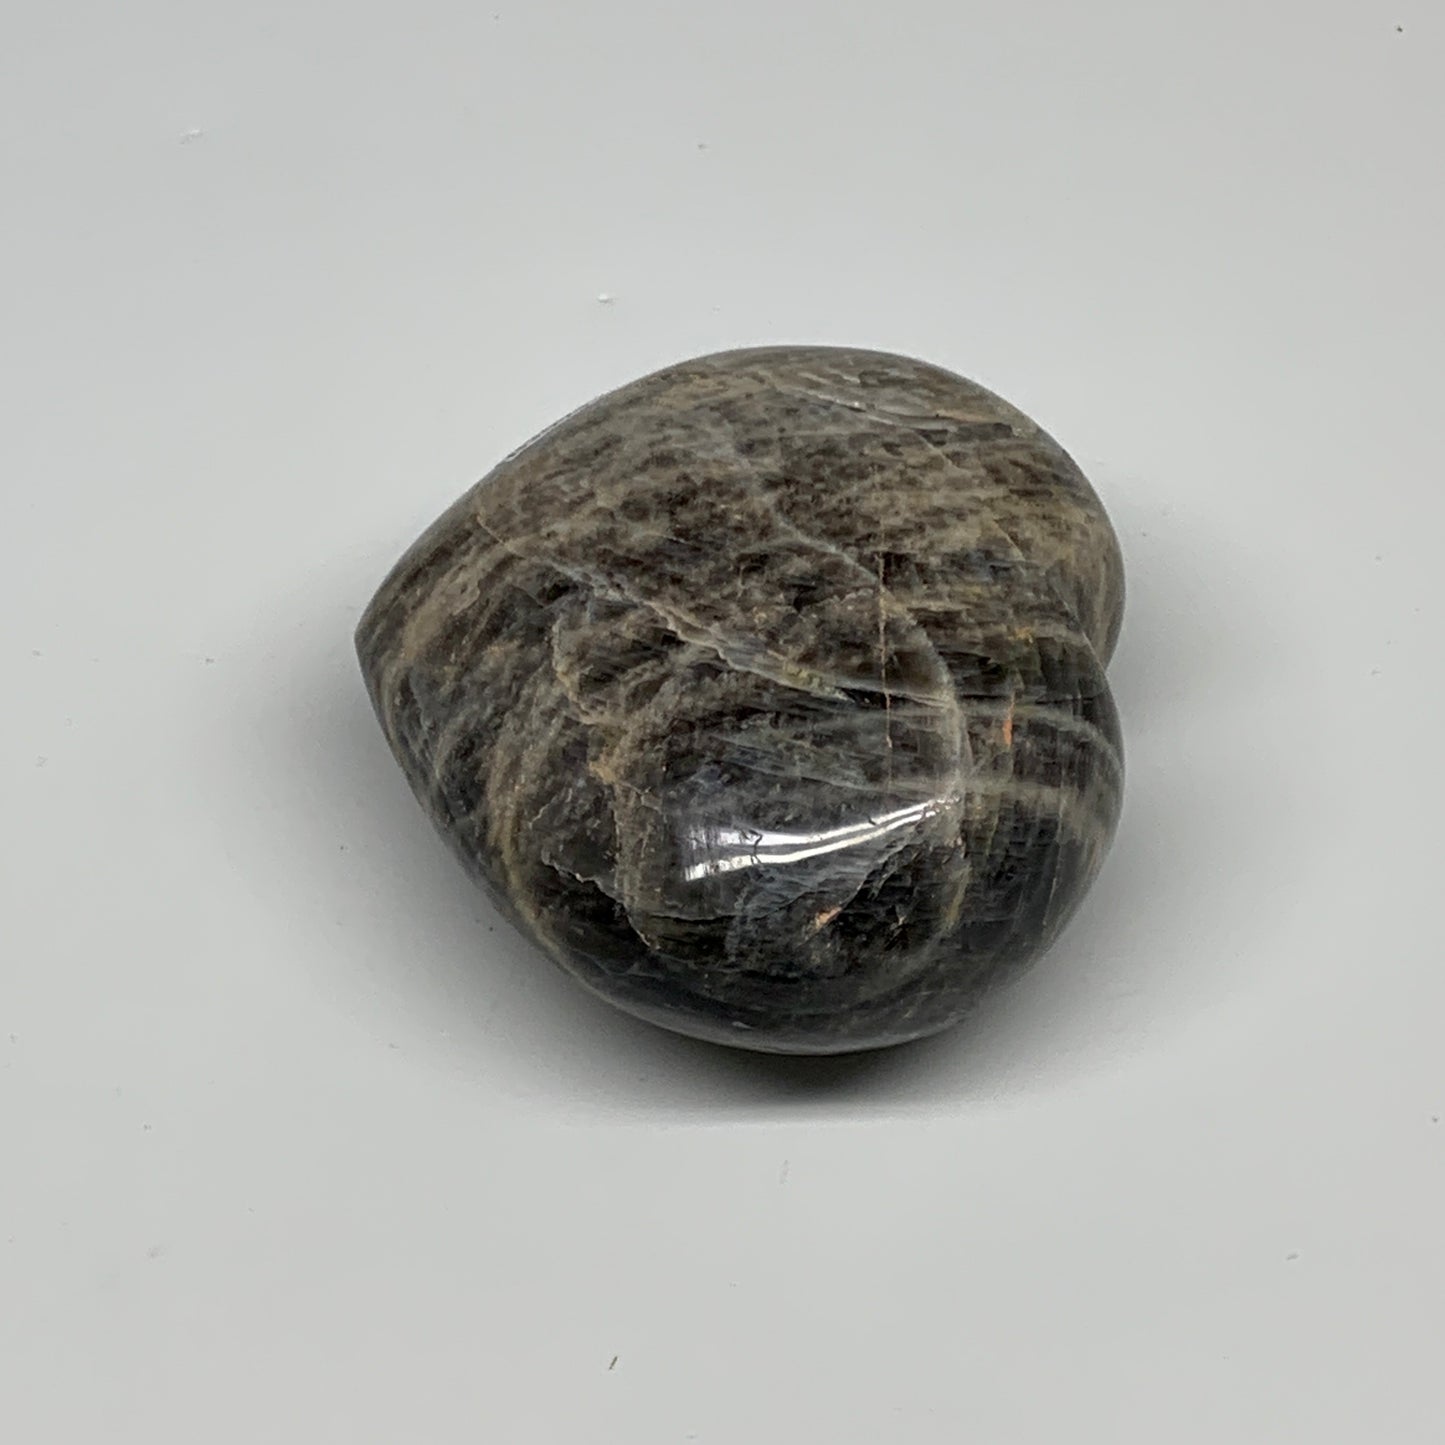 0.78 lbs, 2.9"x3.3"x1.7", Black Moonstone Heart Polished Crystal Home Decor, B30